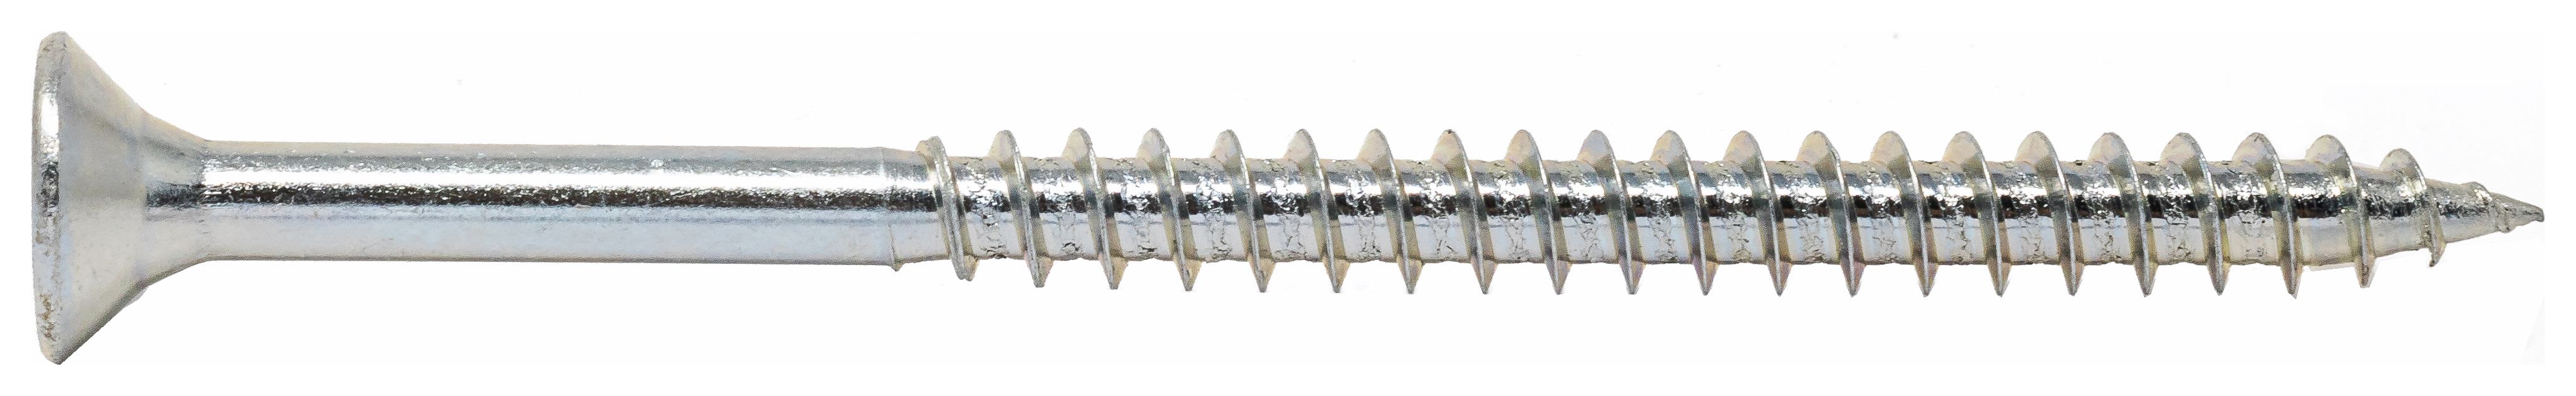 Wickes Single Thread Zinc Plated Screw - 6